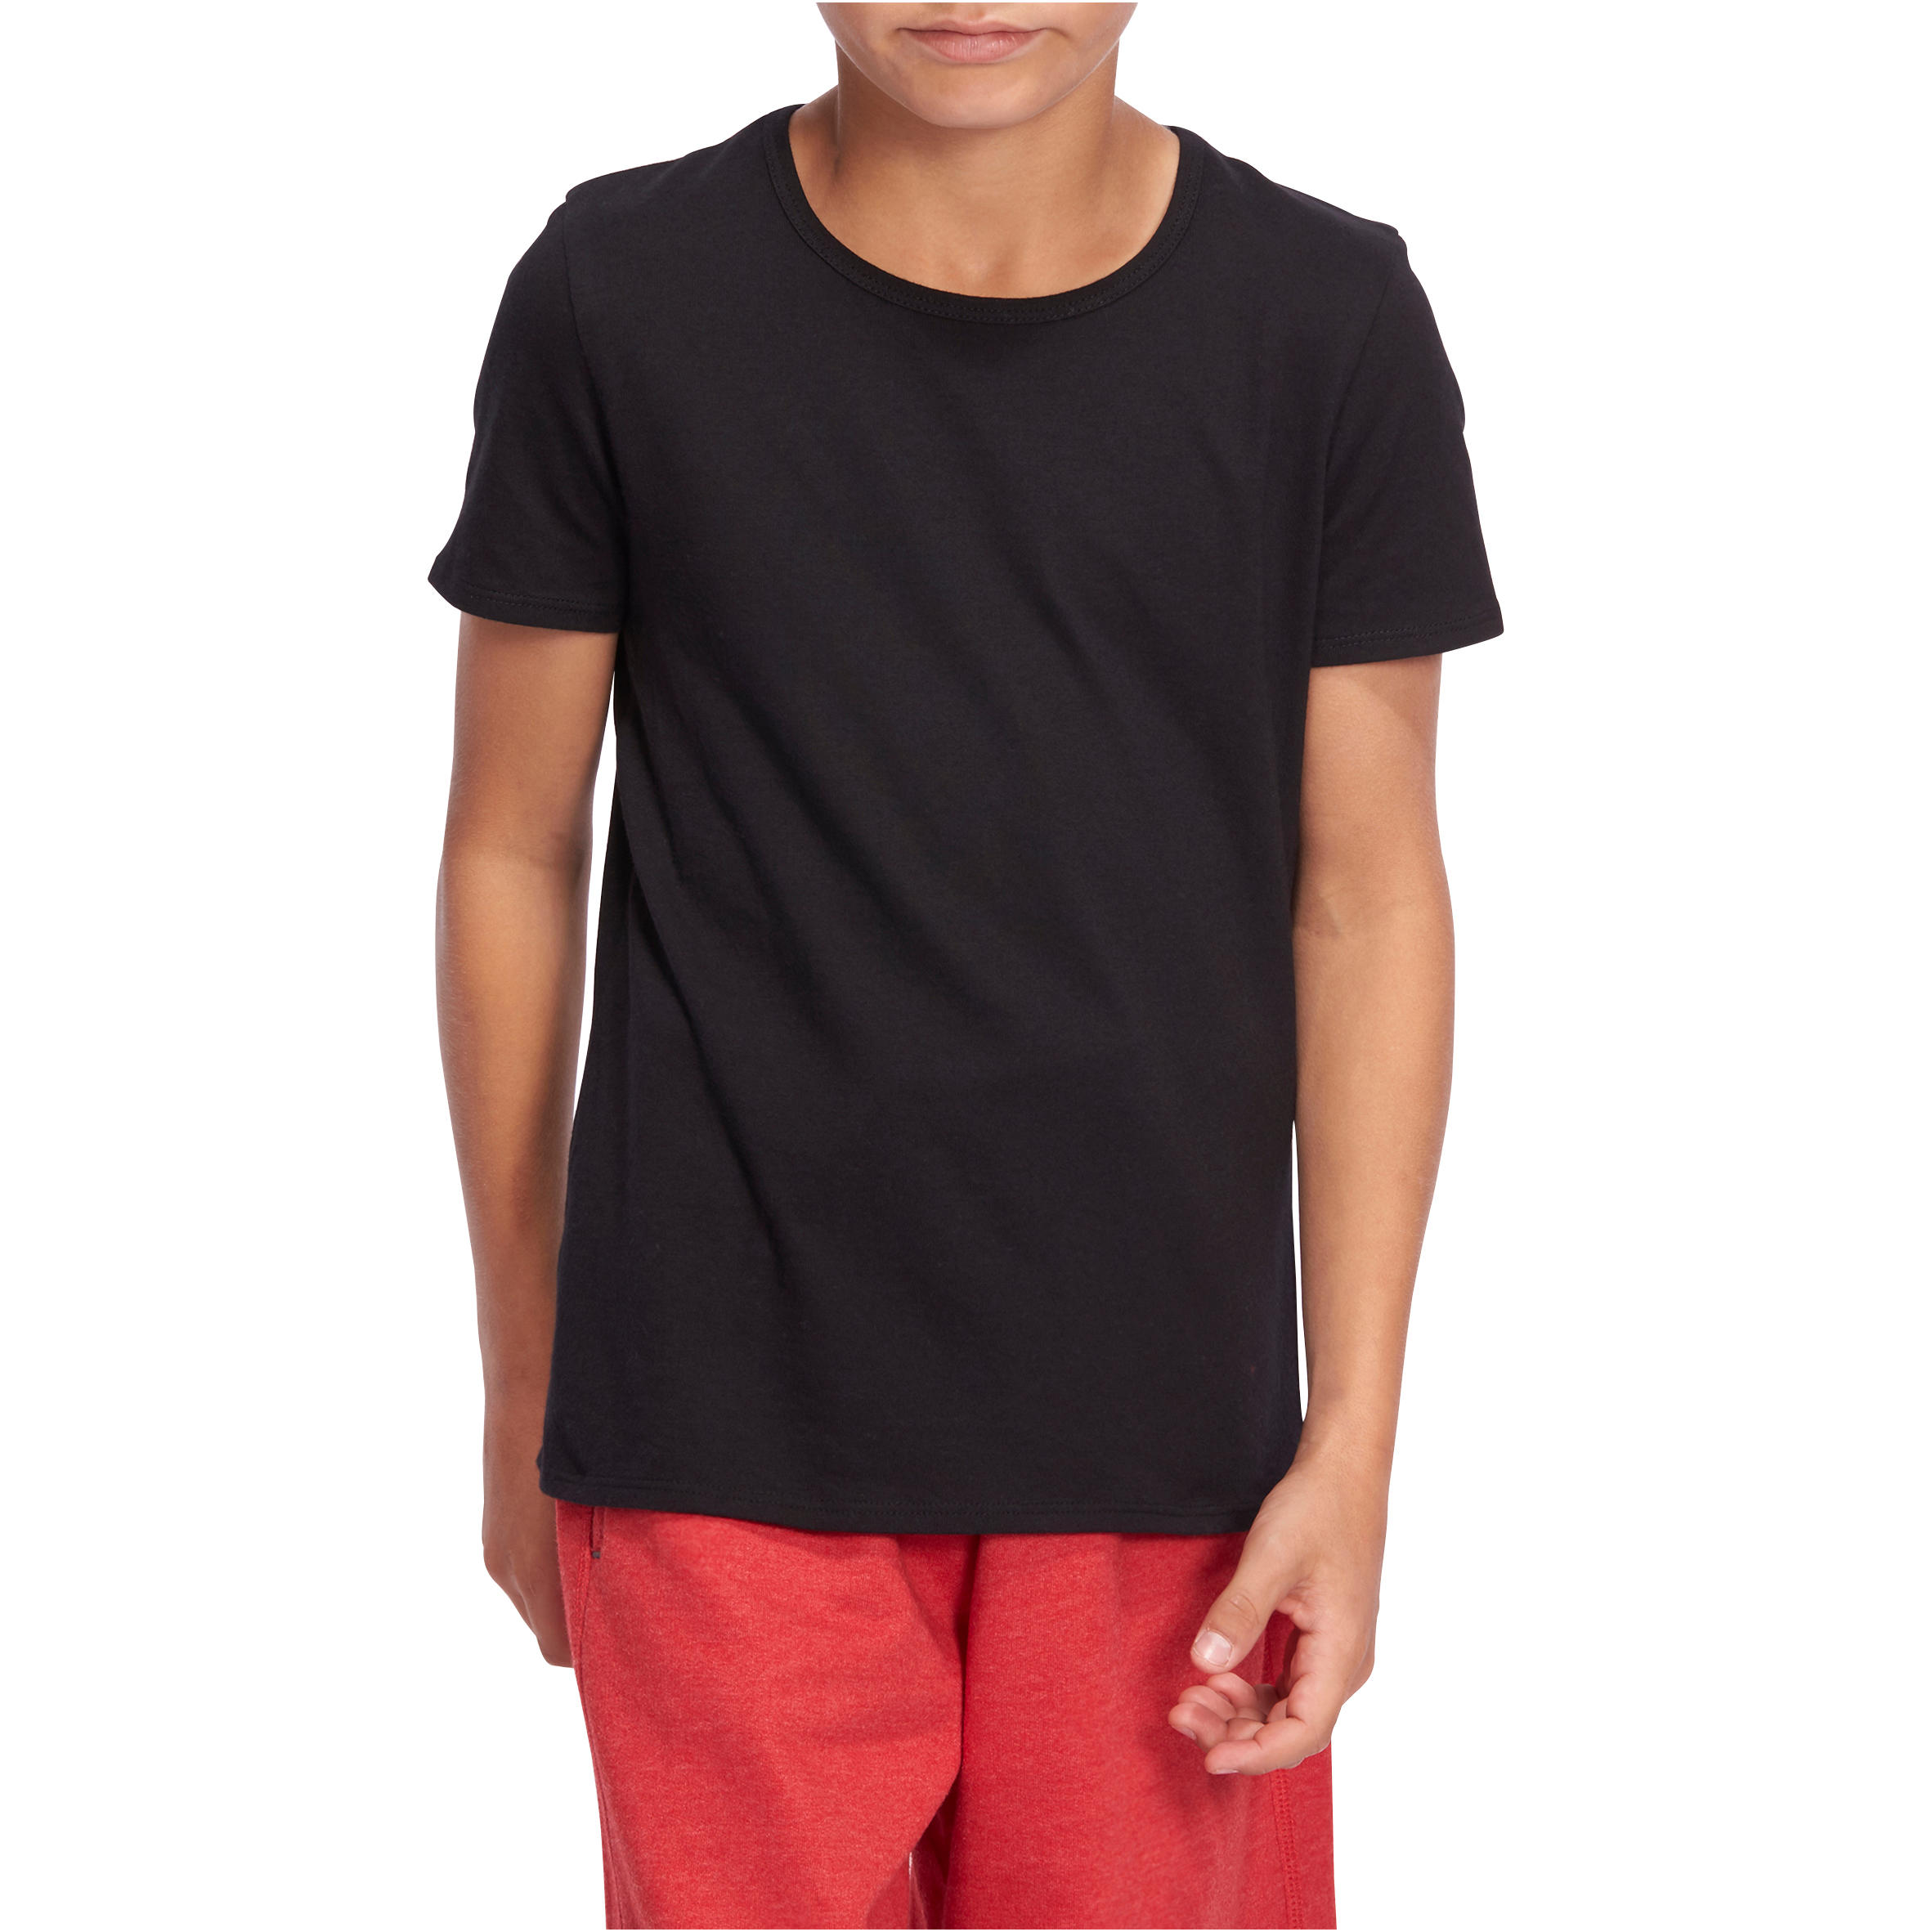 100 Boys' Short-Sleeved Gym T-Shirt - Black 2/8